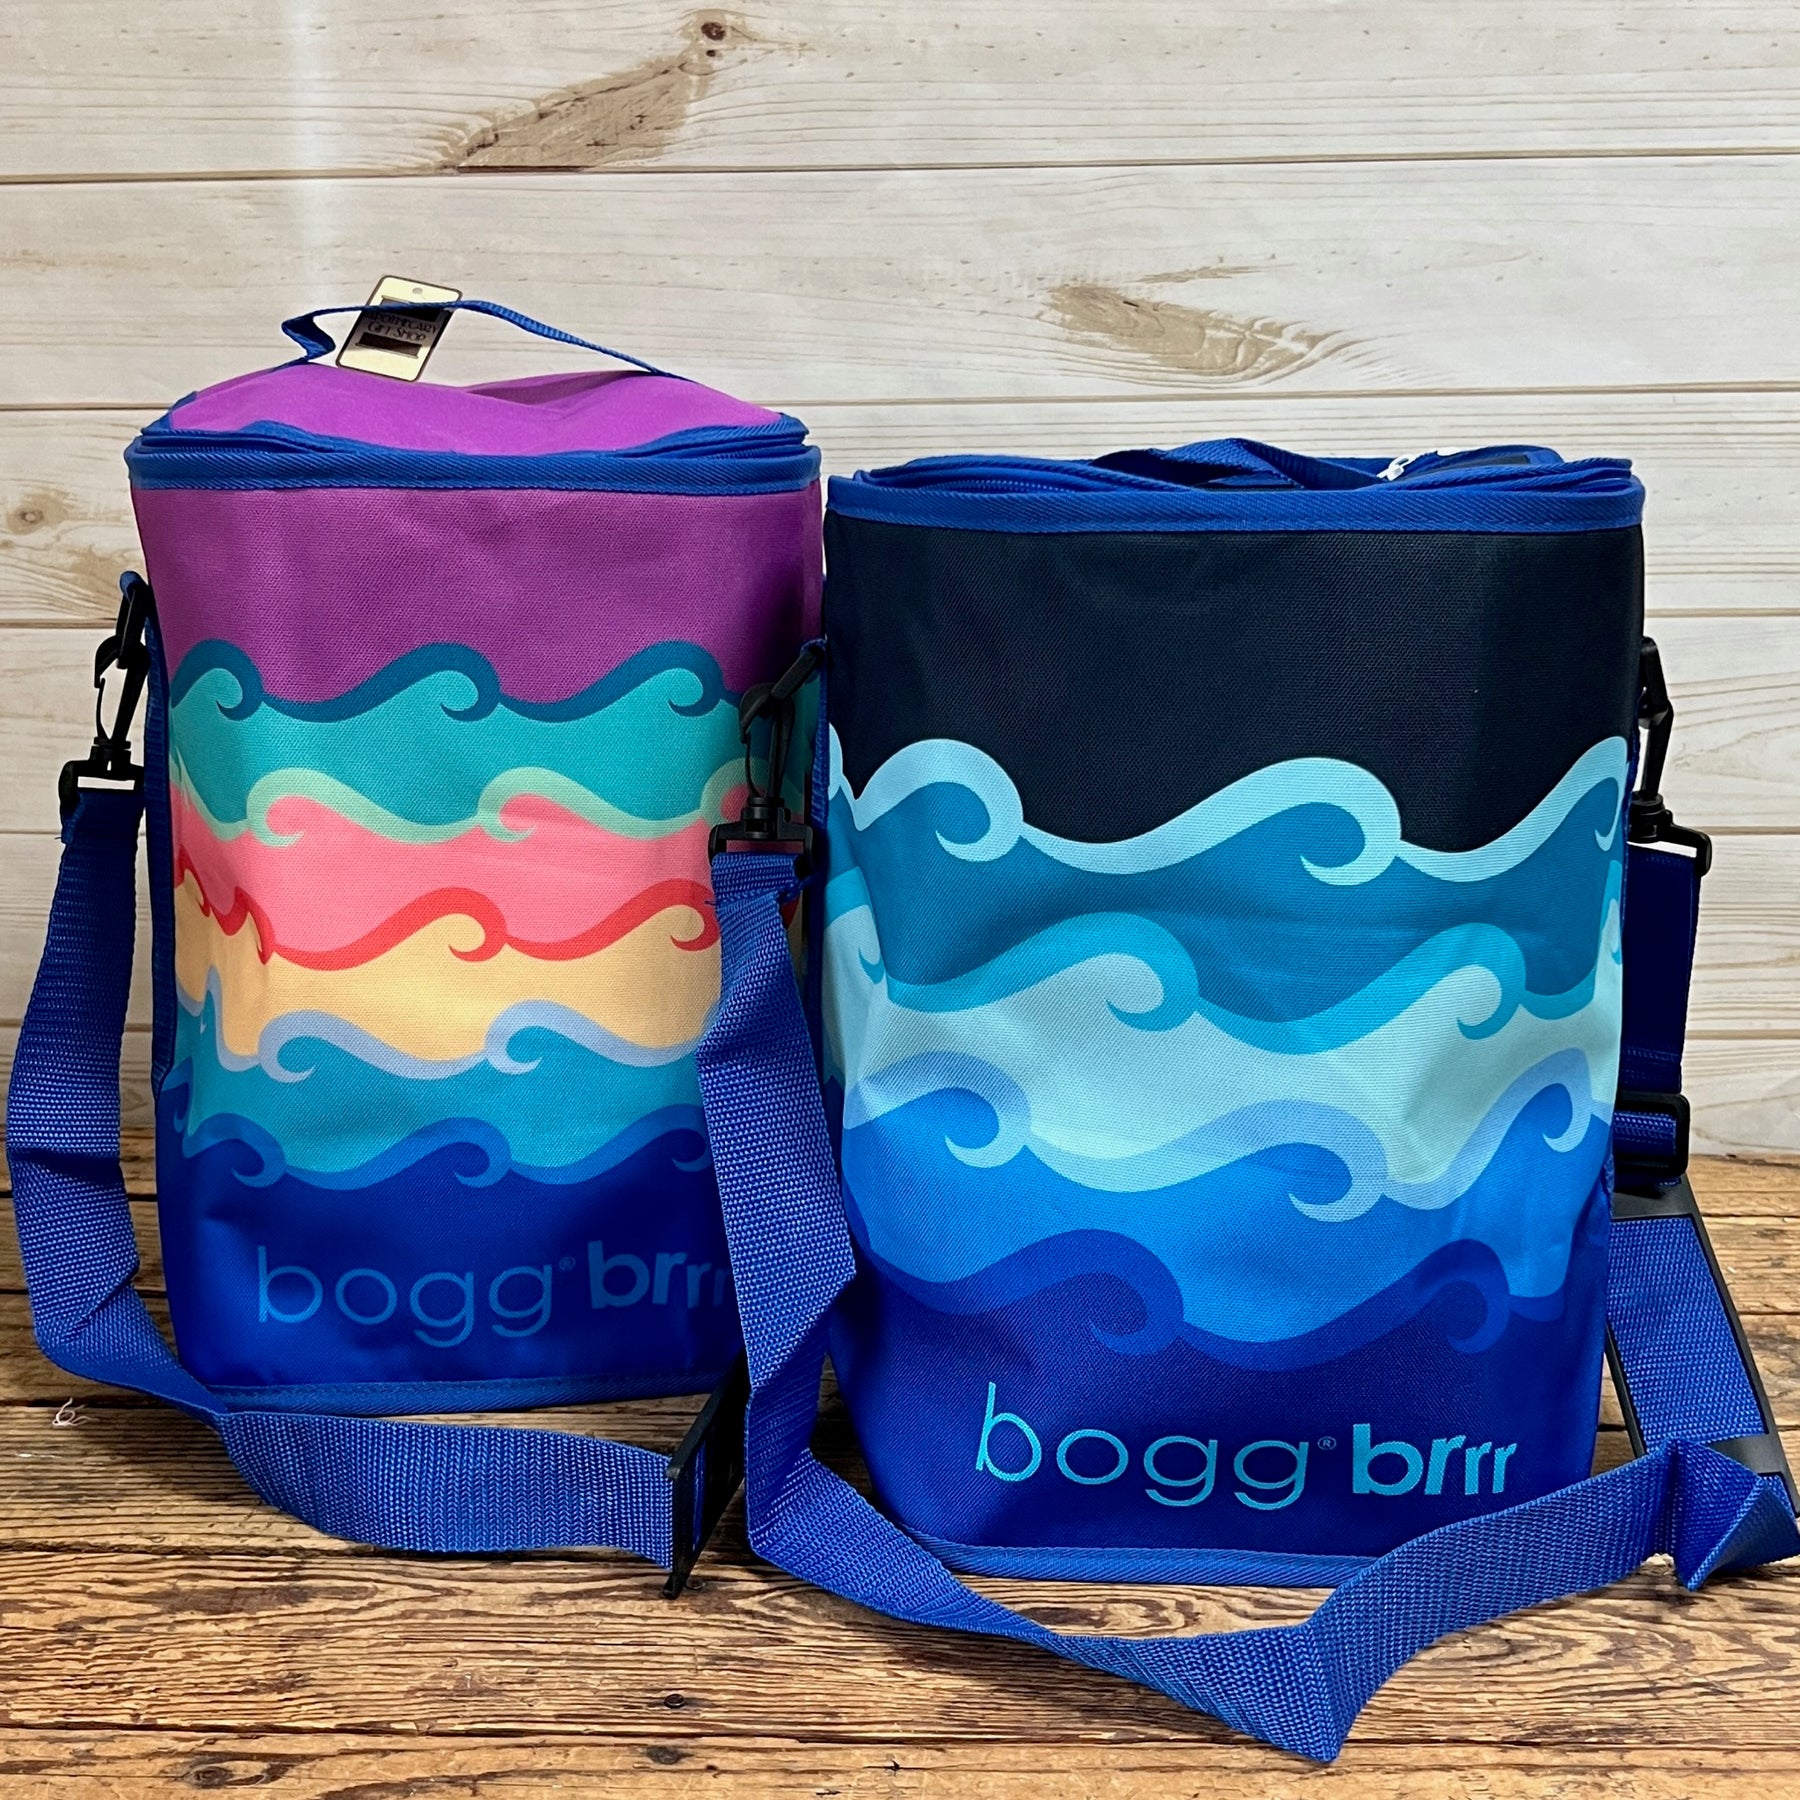 Bogg Bags Bogg Brrr and A Half Cooler Insert for Original Bogg Bag in - Her  Hide Out